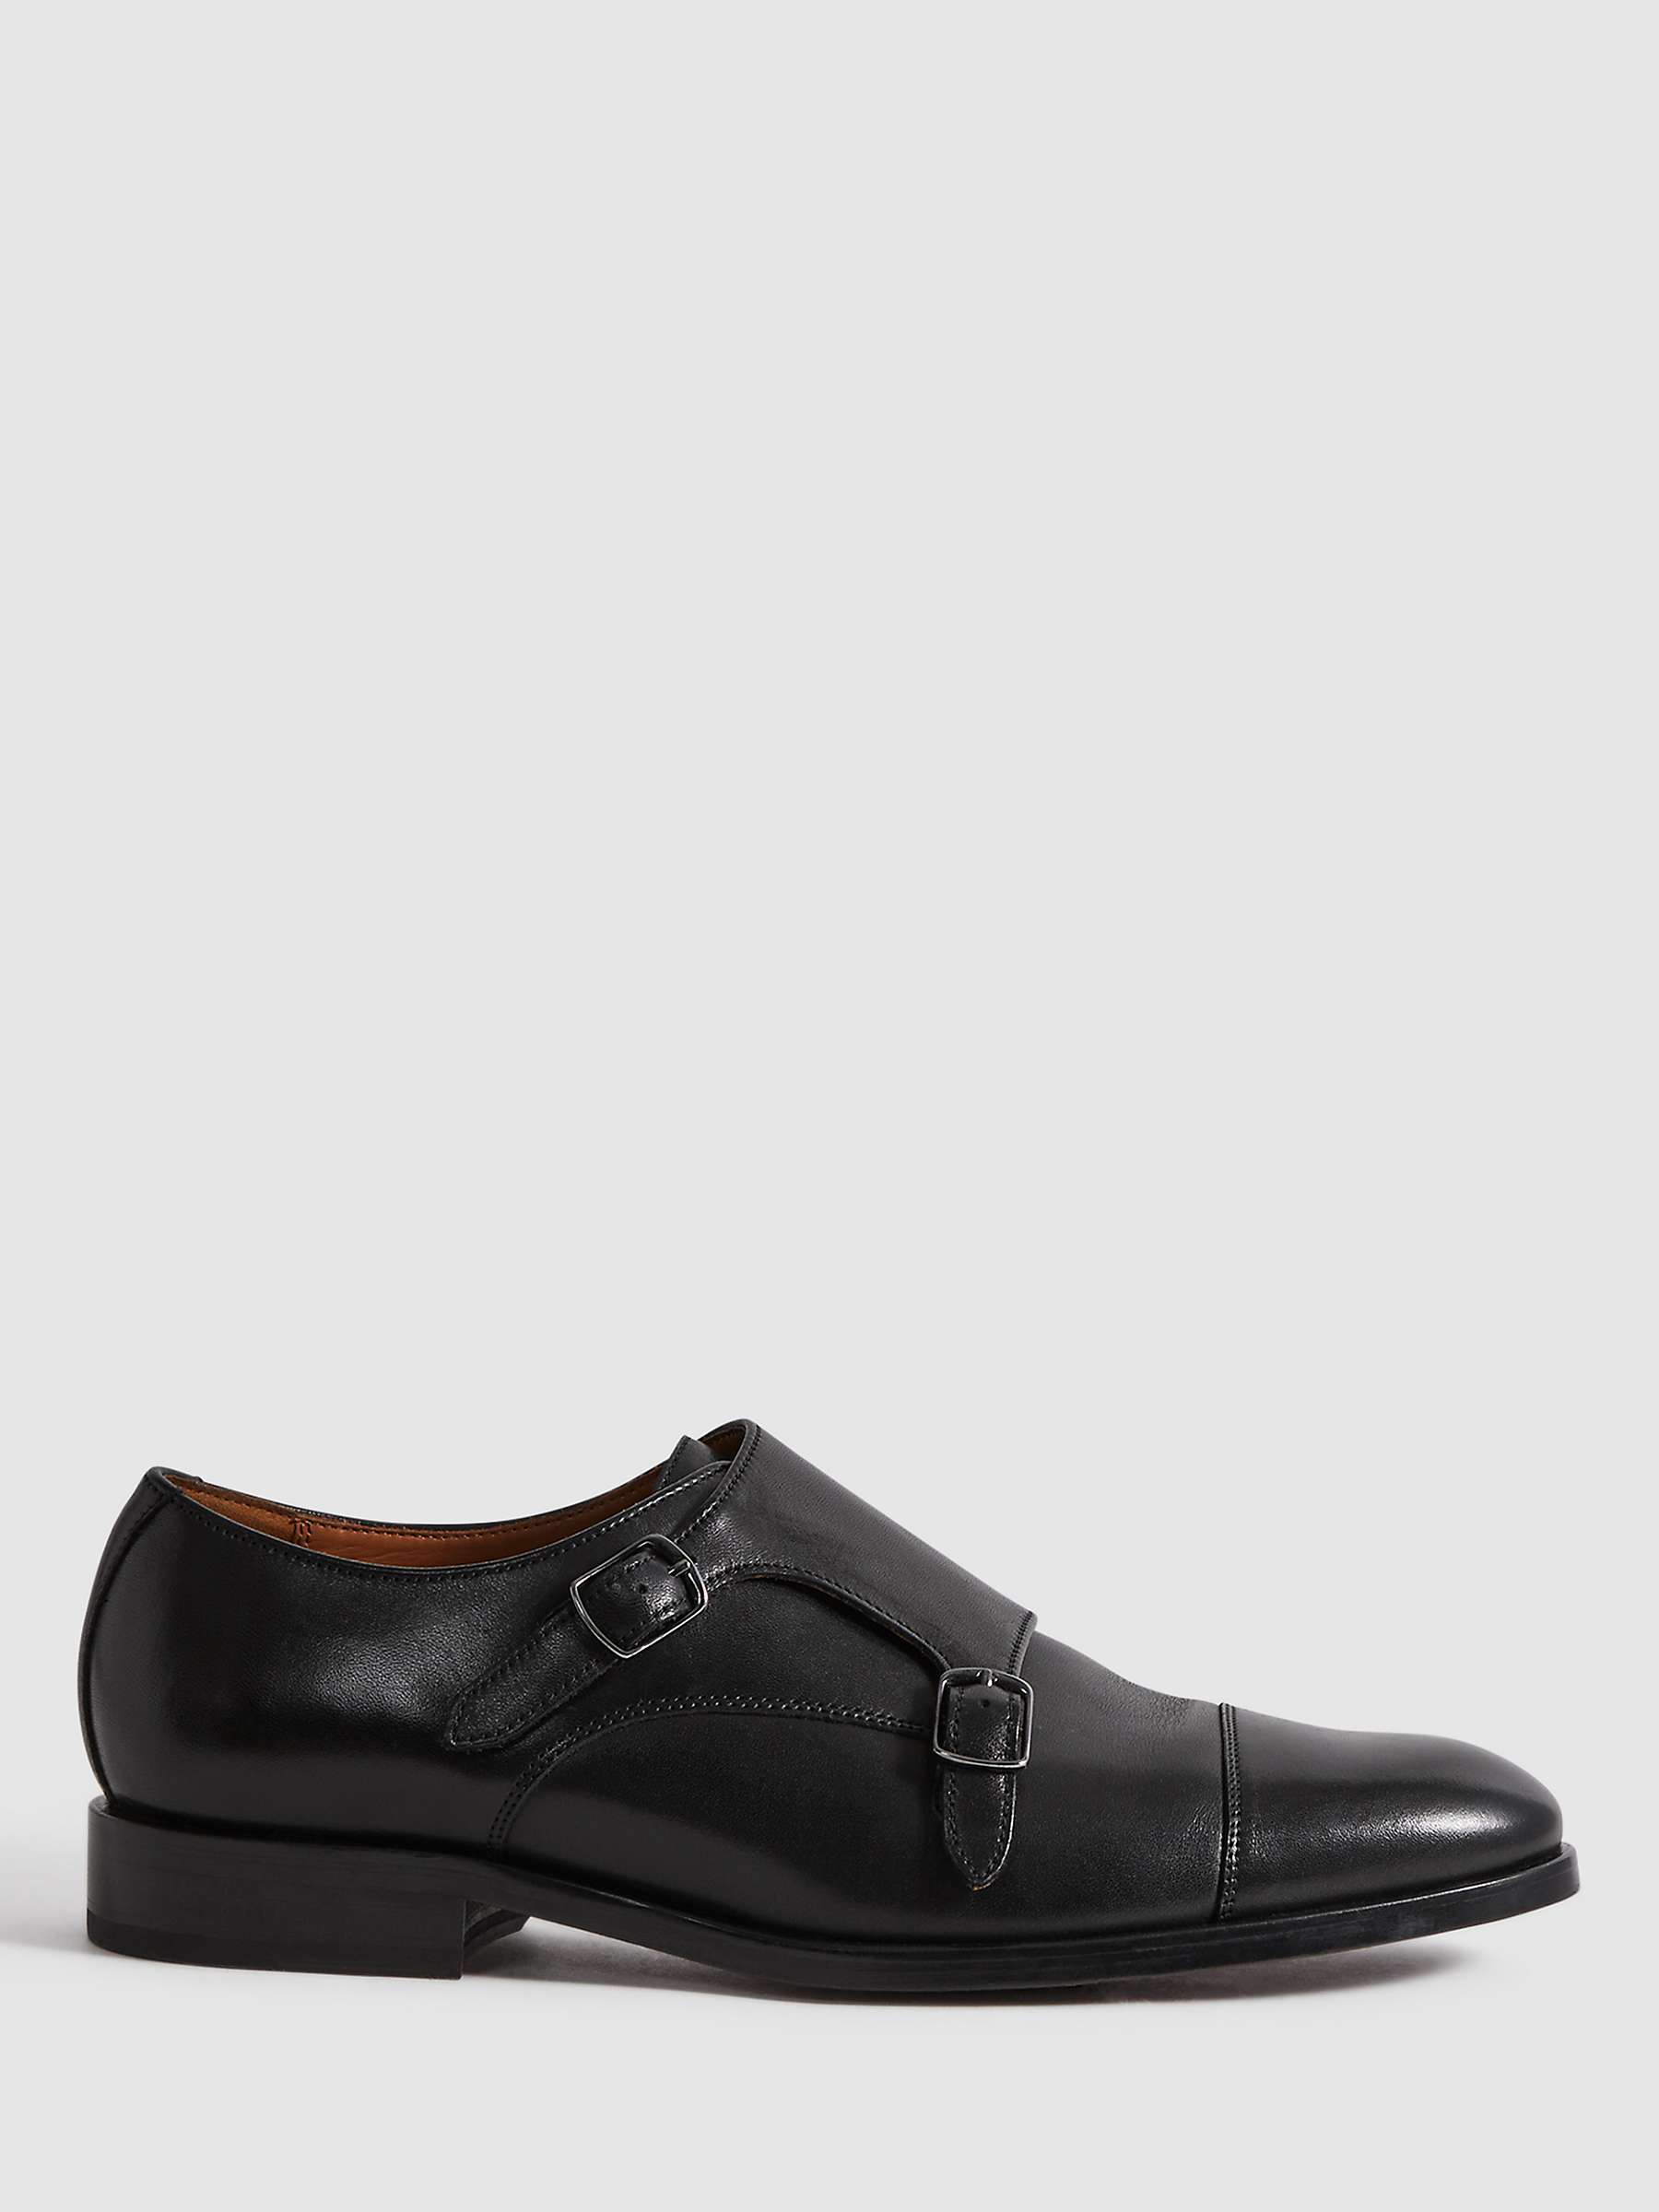 Buy Reiss Amalfi Monk Shoes, Black Online at johnlewis.com